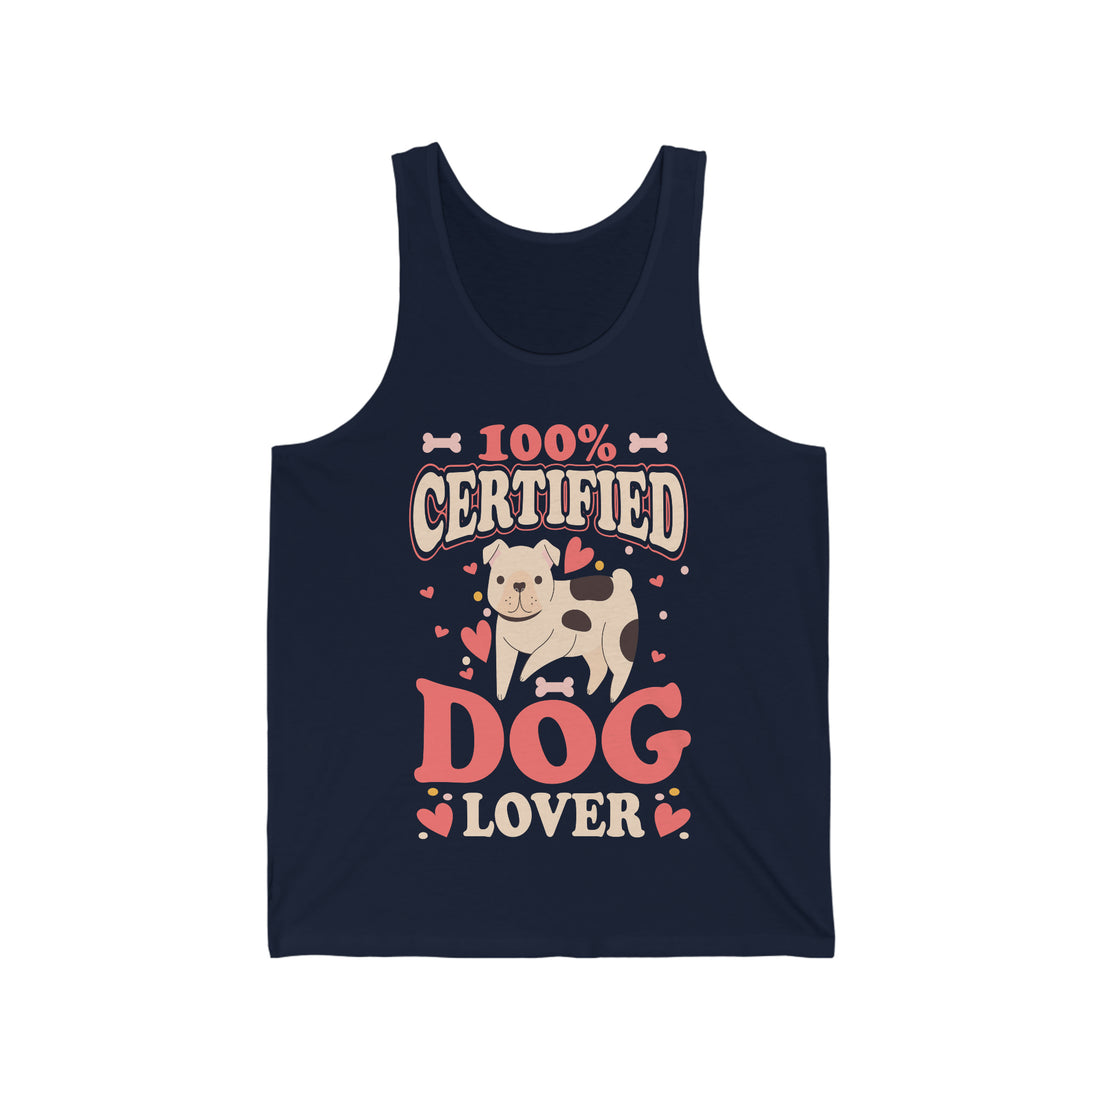 100% Certified Dog Lover - Unisex Jersey Tank Top